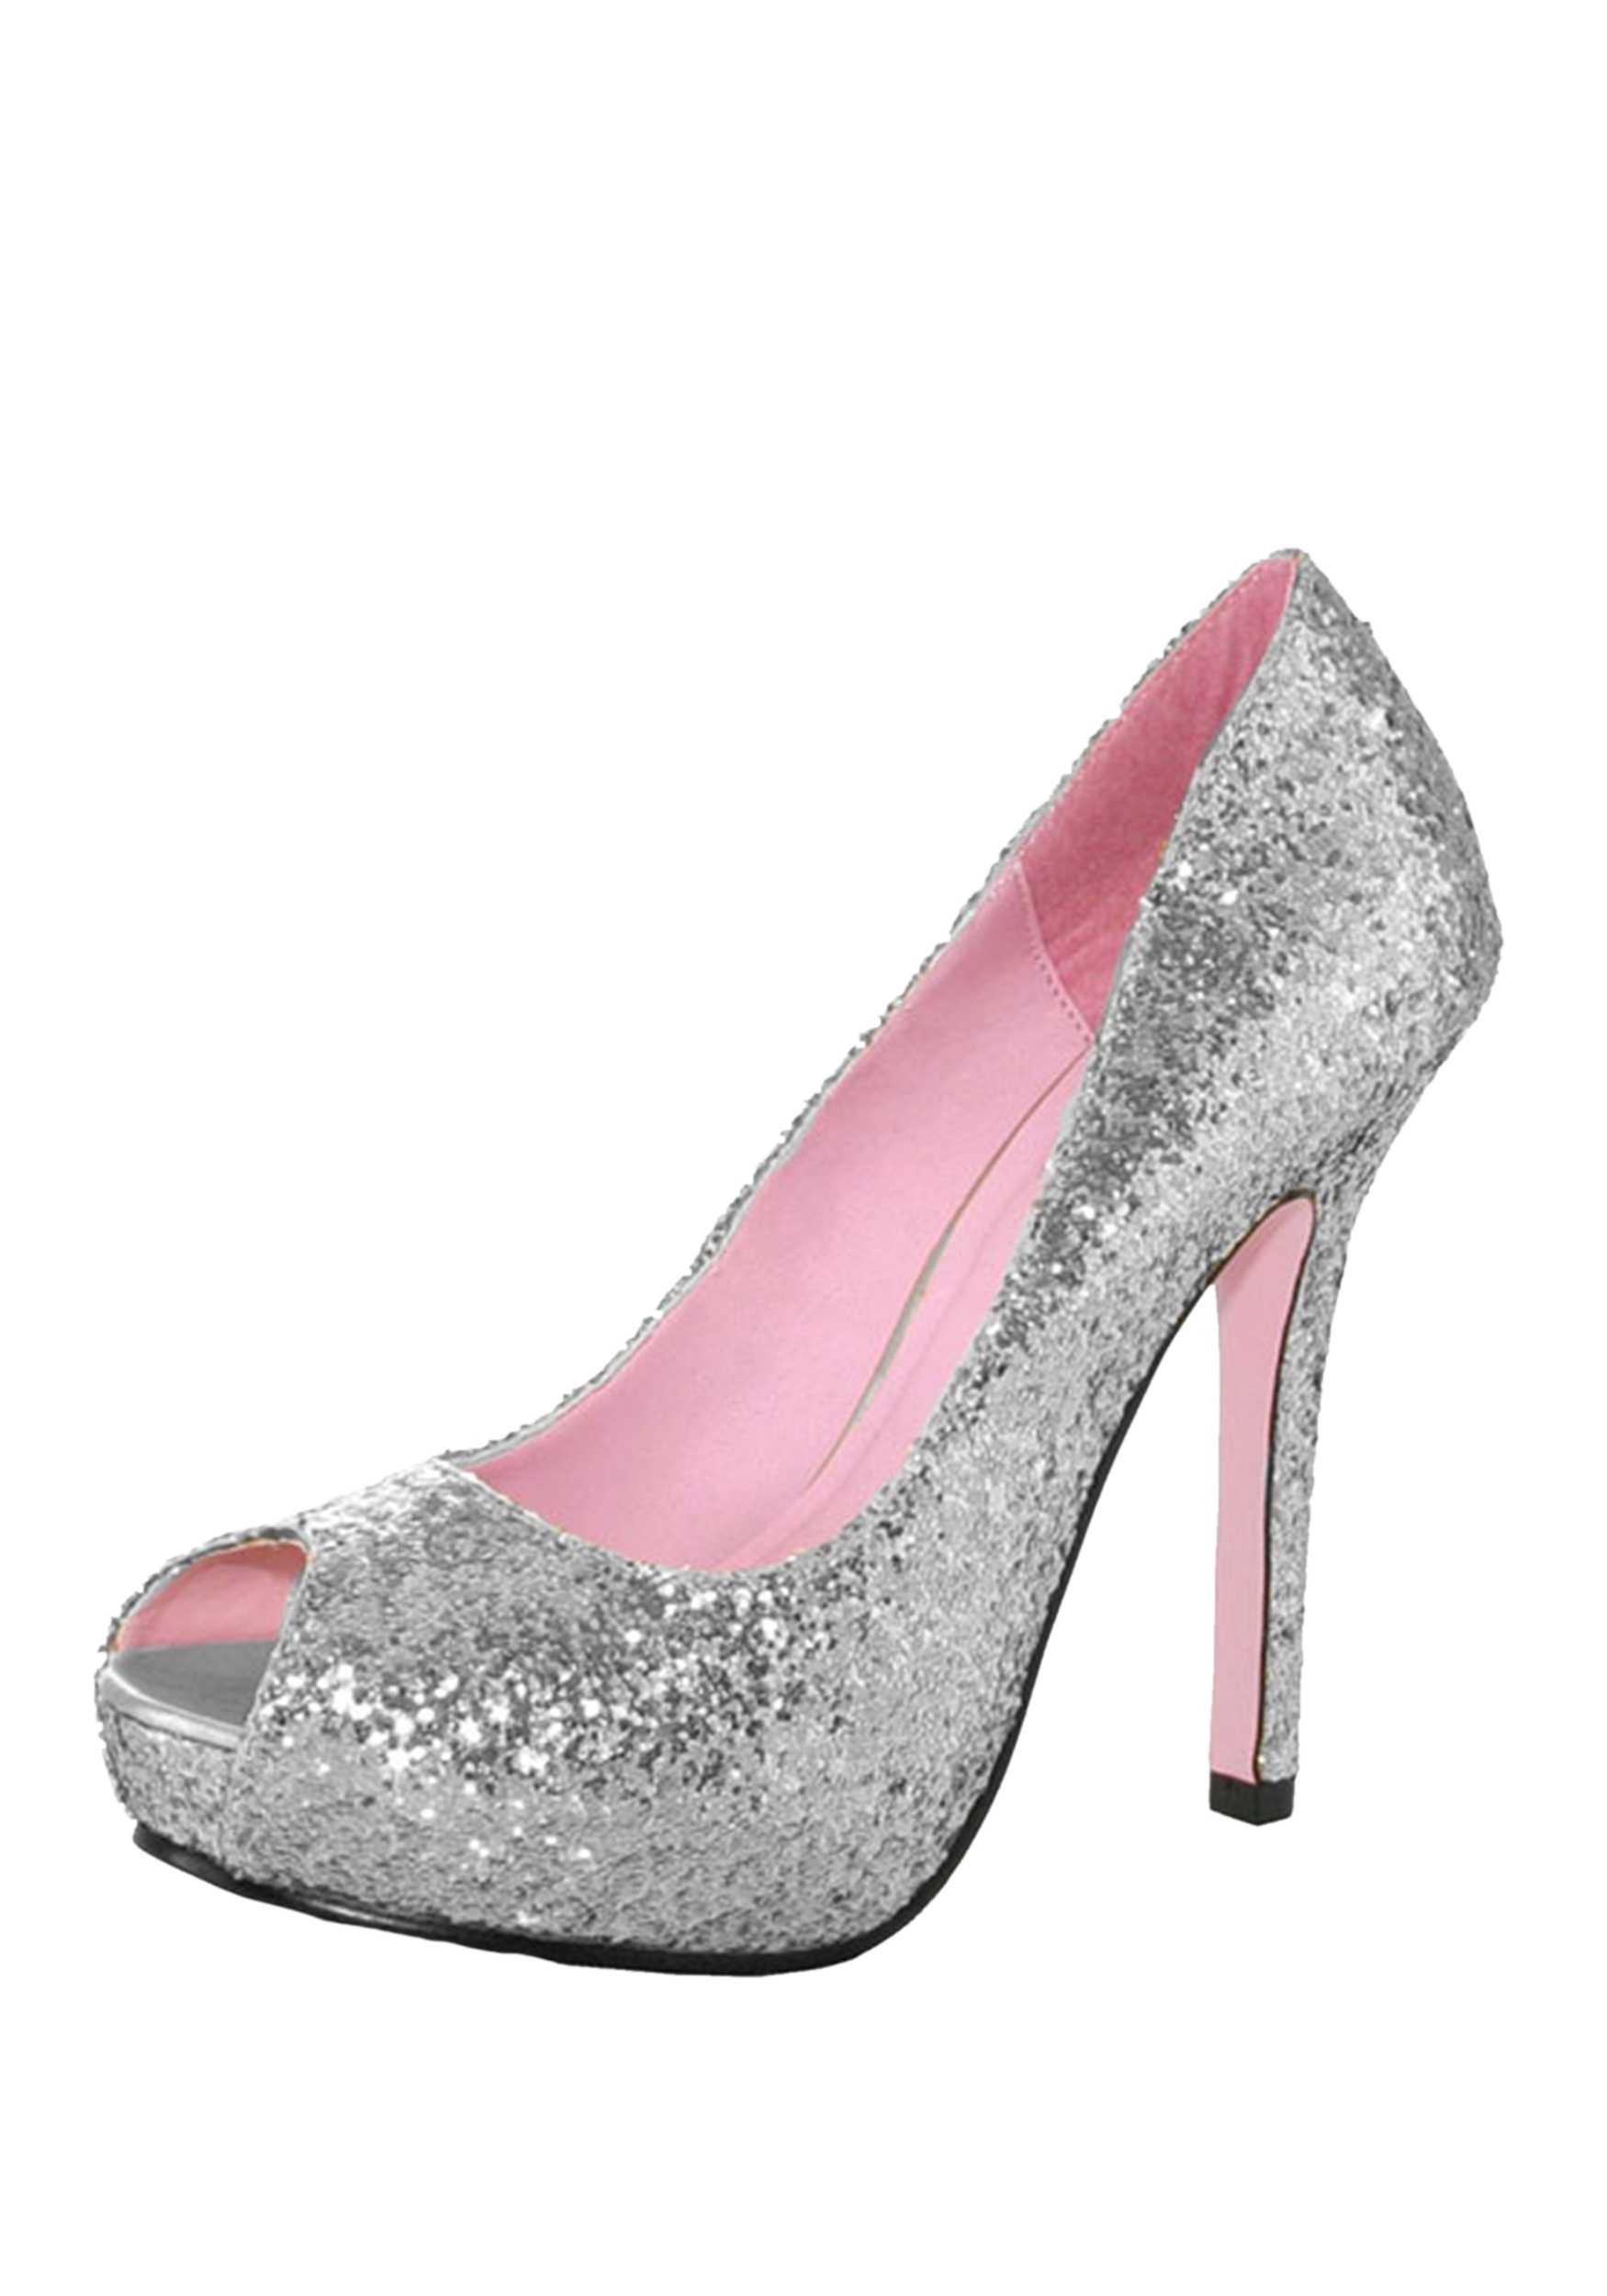 sparkly high heels